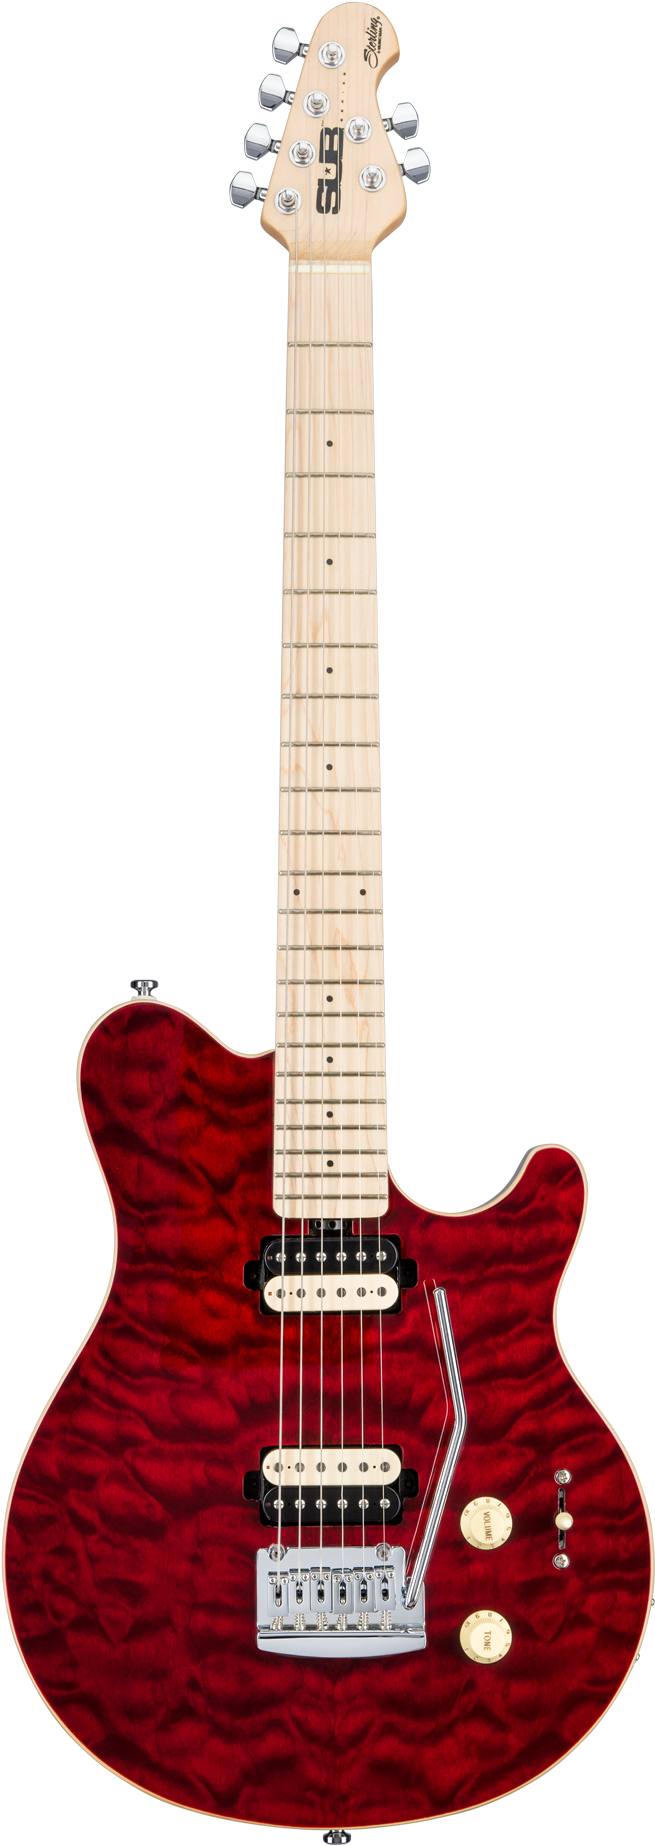 Рок красная гитара PNG Image